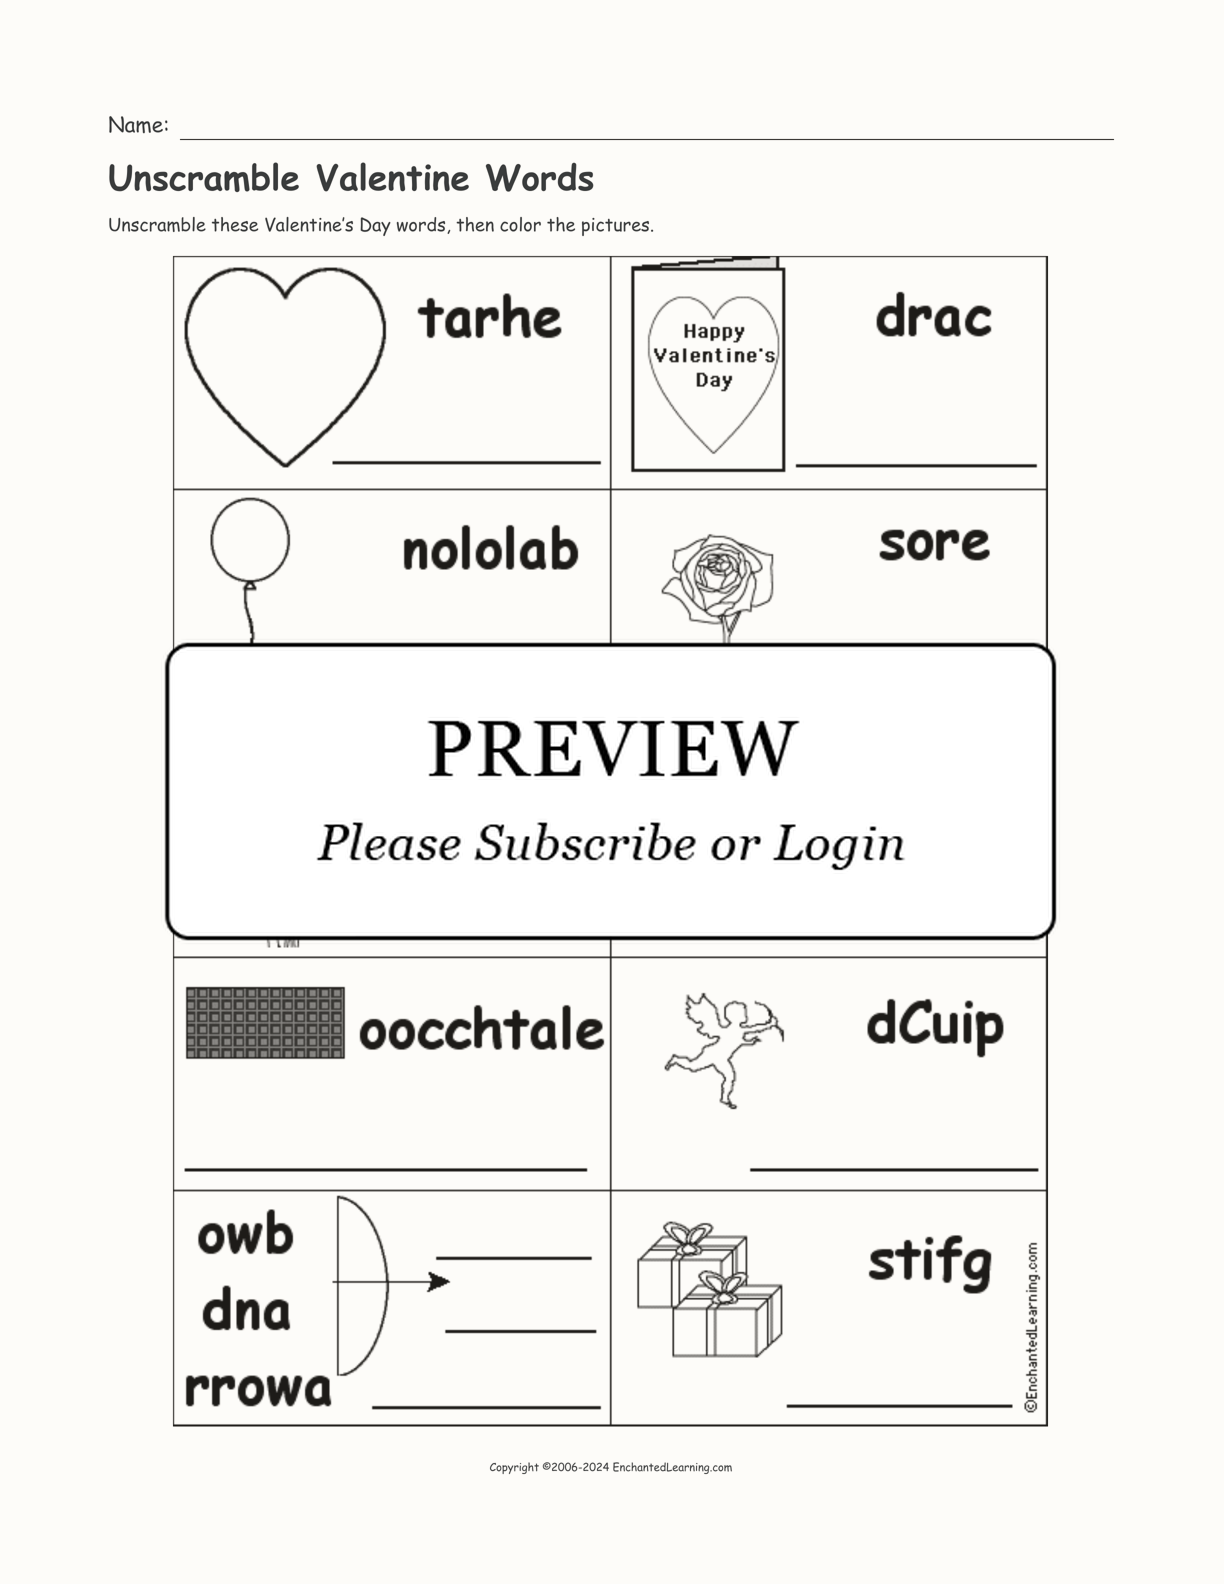 Unscramble Valentine Words interactive worksheet page 1